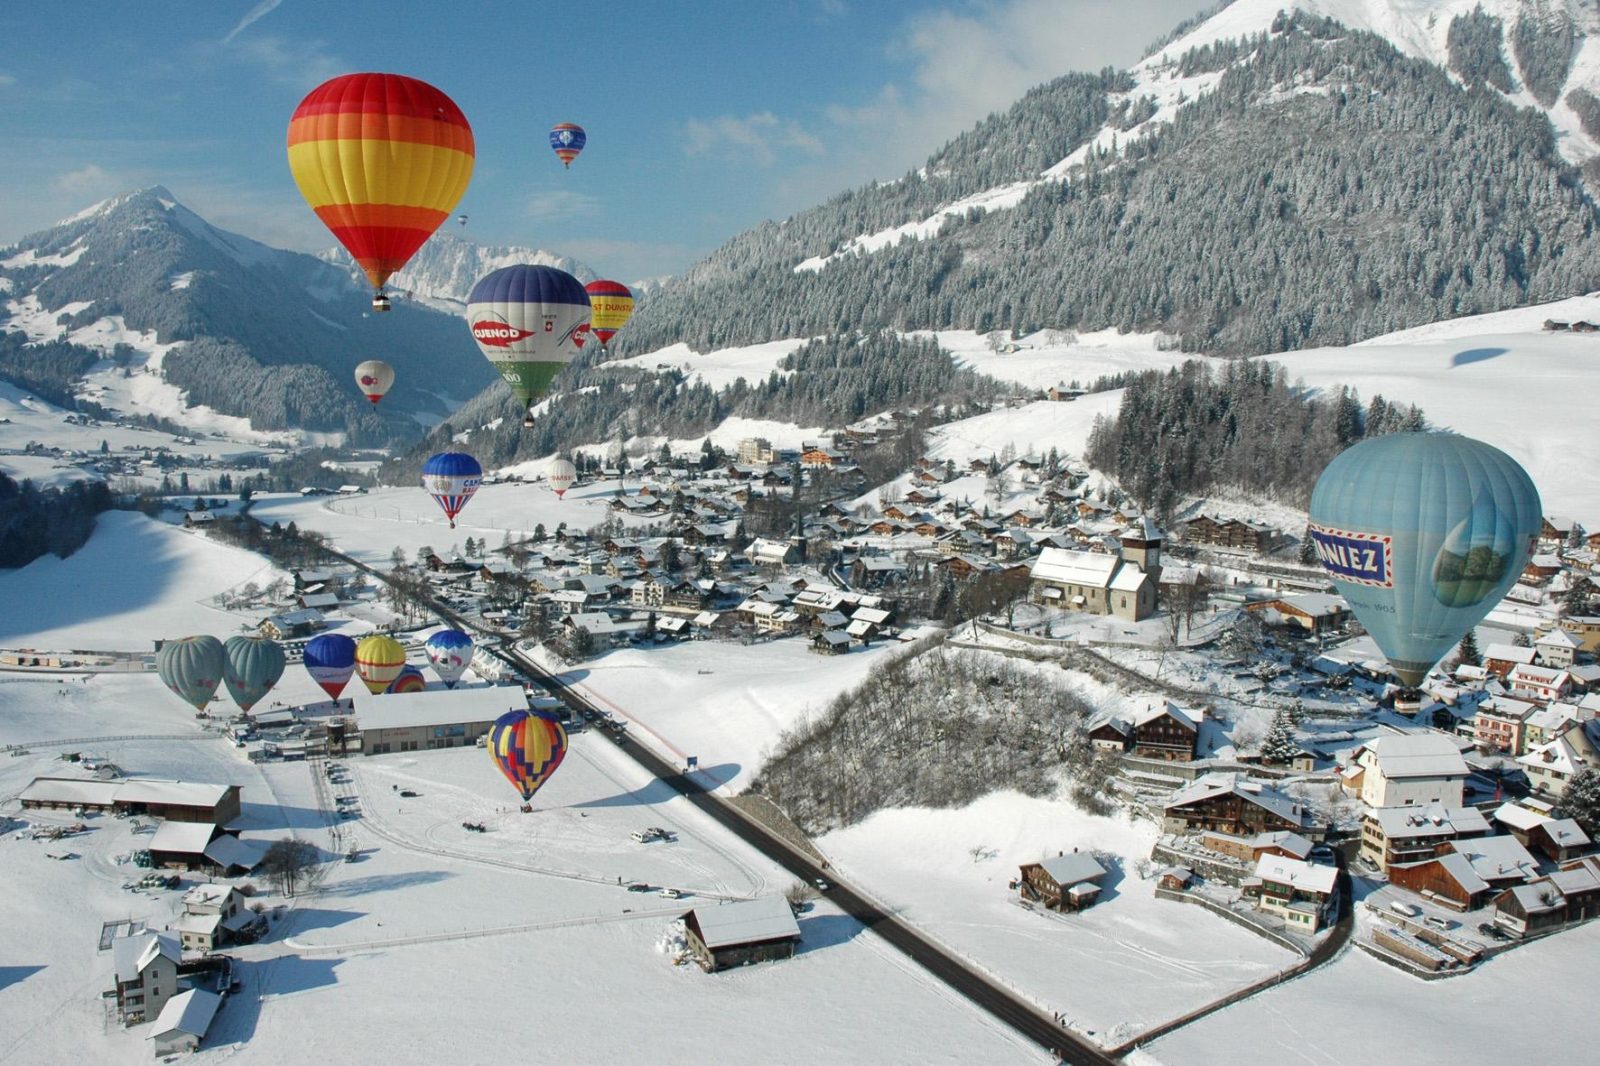 Château-d’Oex in switzerland hot air balloon festival unique destinations in europe